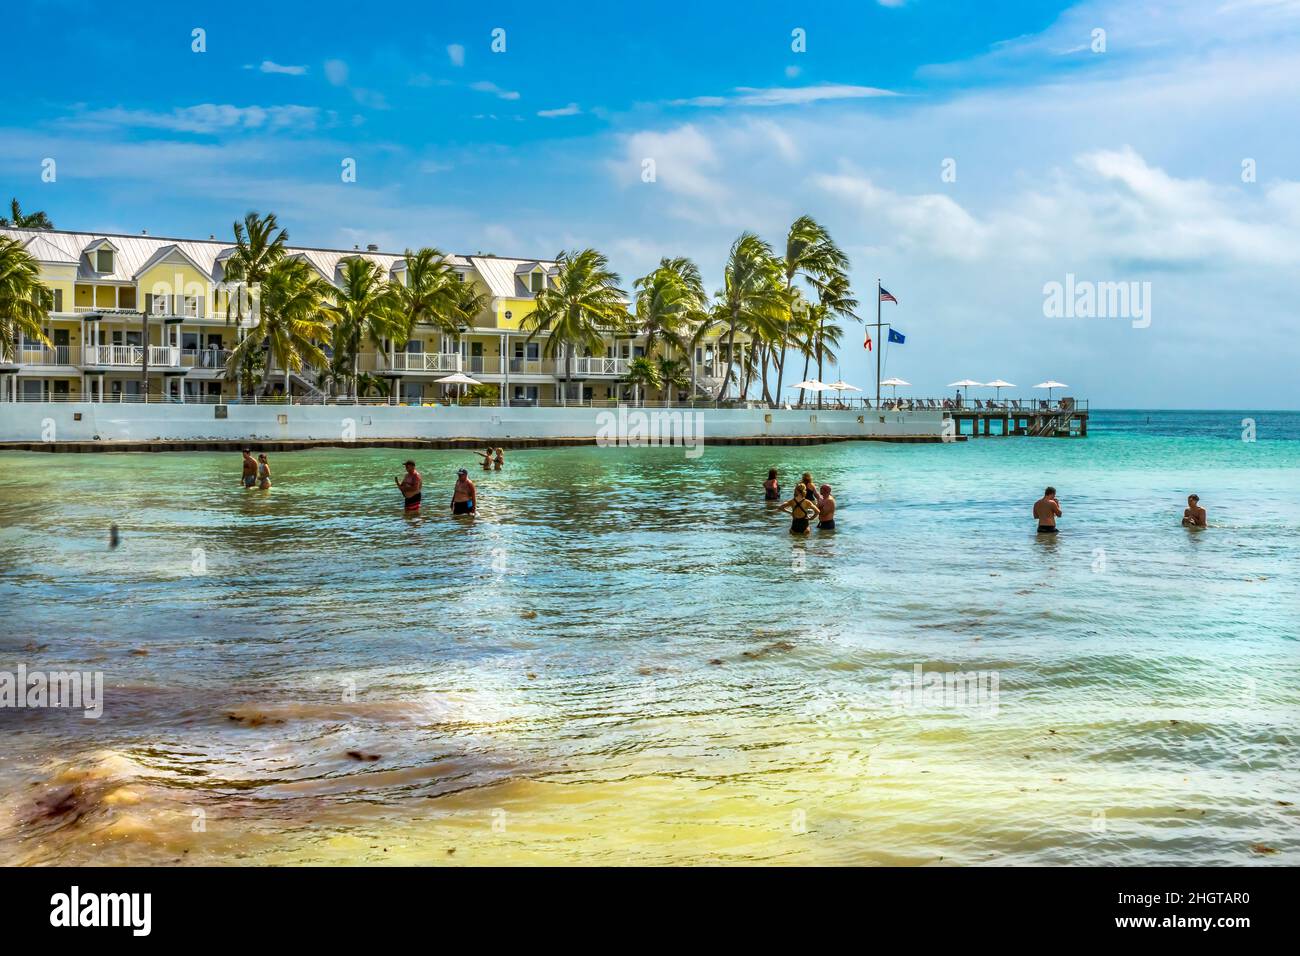 Farbenfrohe Higgs Memorial Beach Park Schwimmer Pier Palmen Blue Water Key West Florida Stockfoto